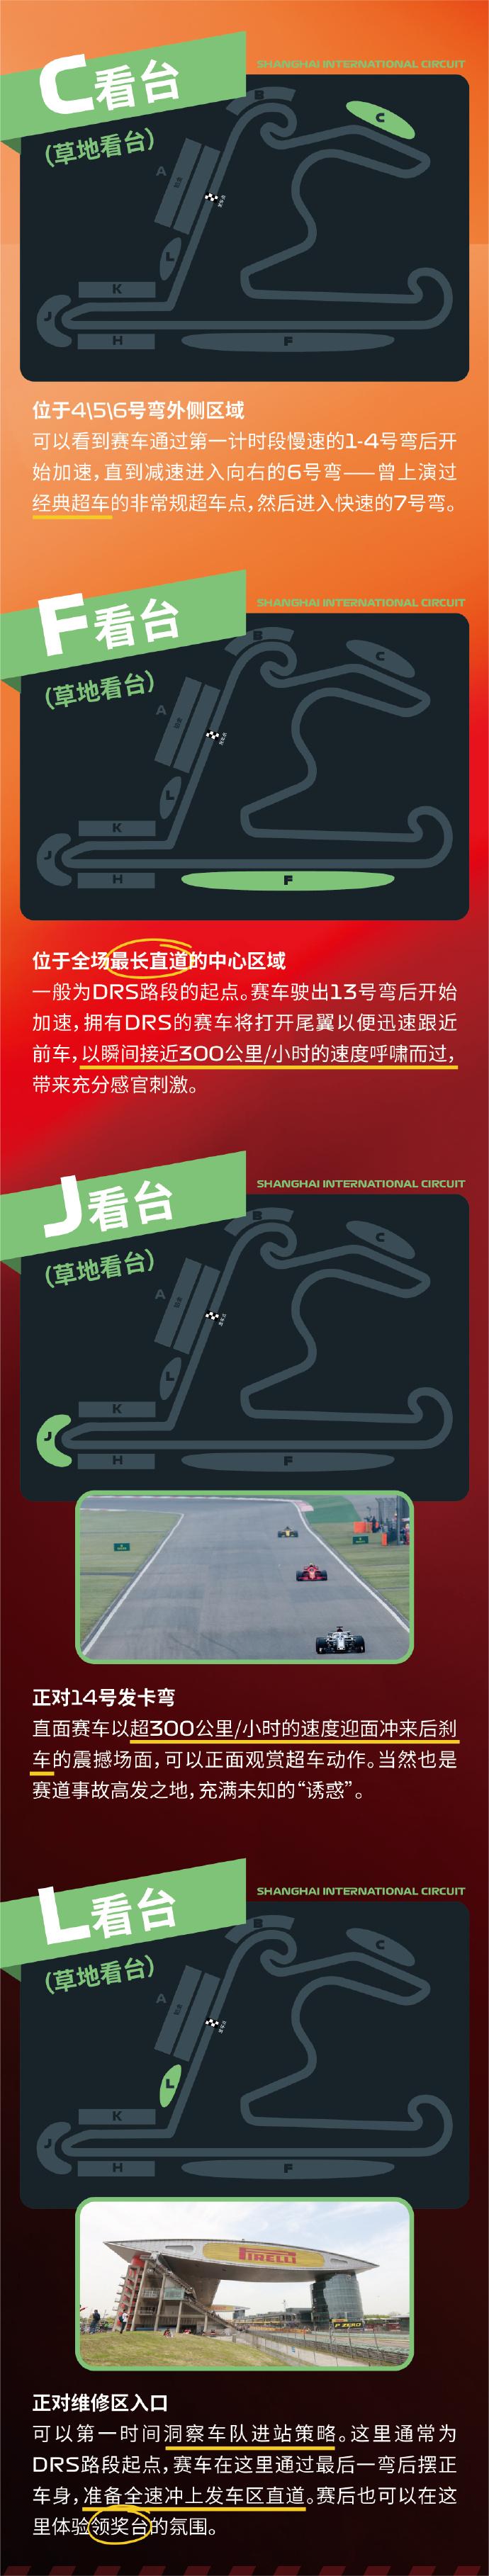 F1中国大奖赛4.jpg